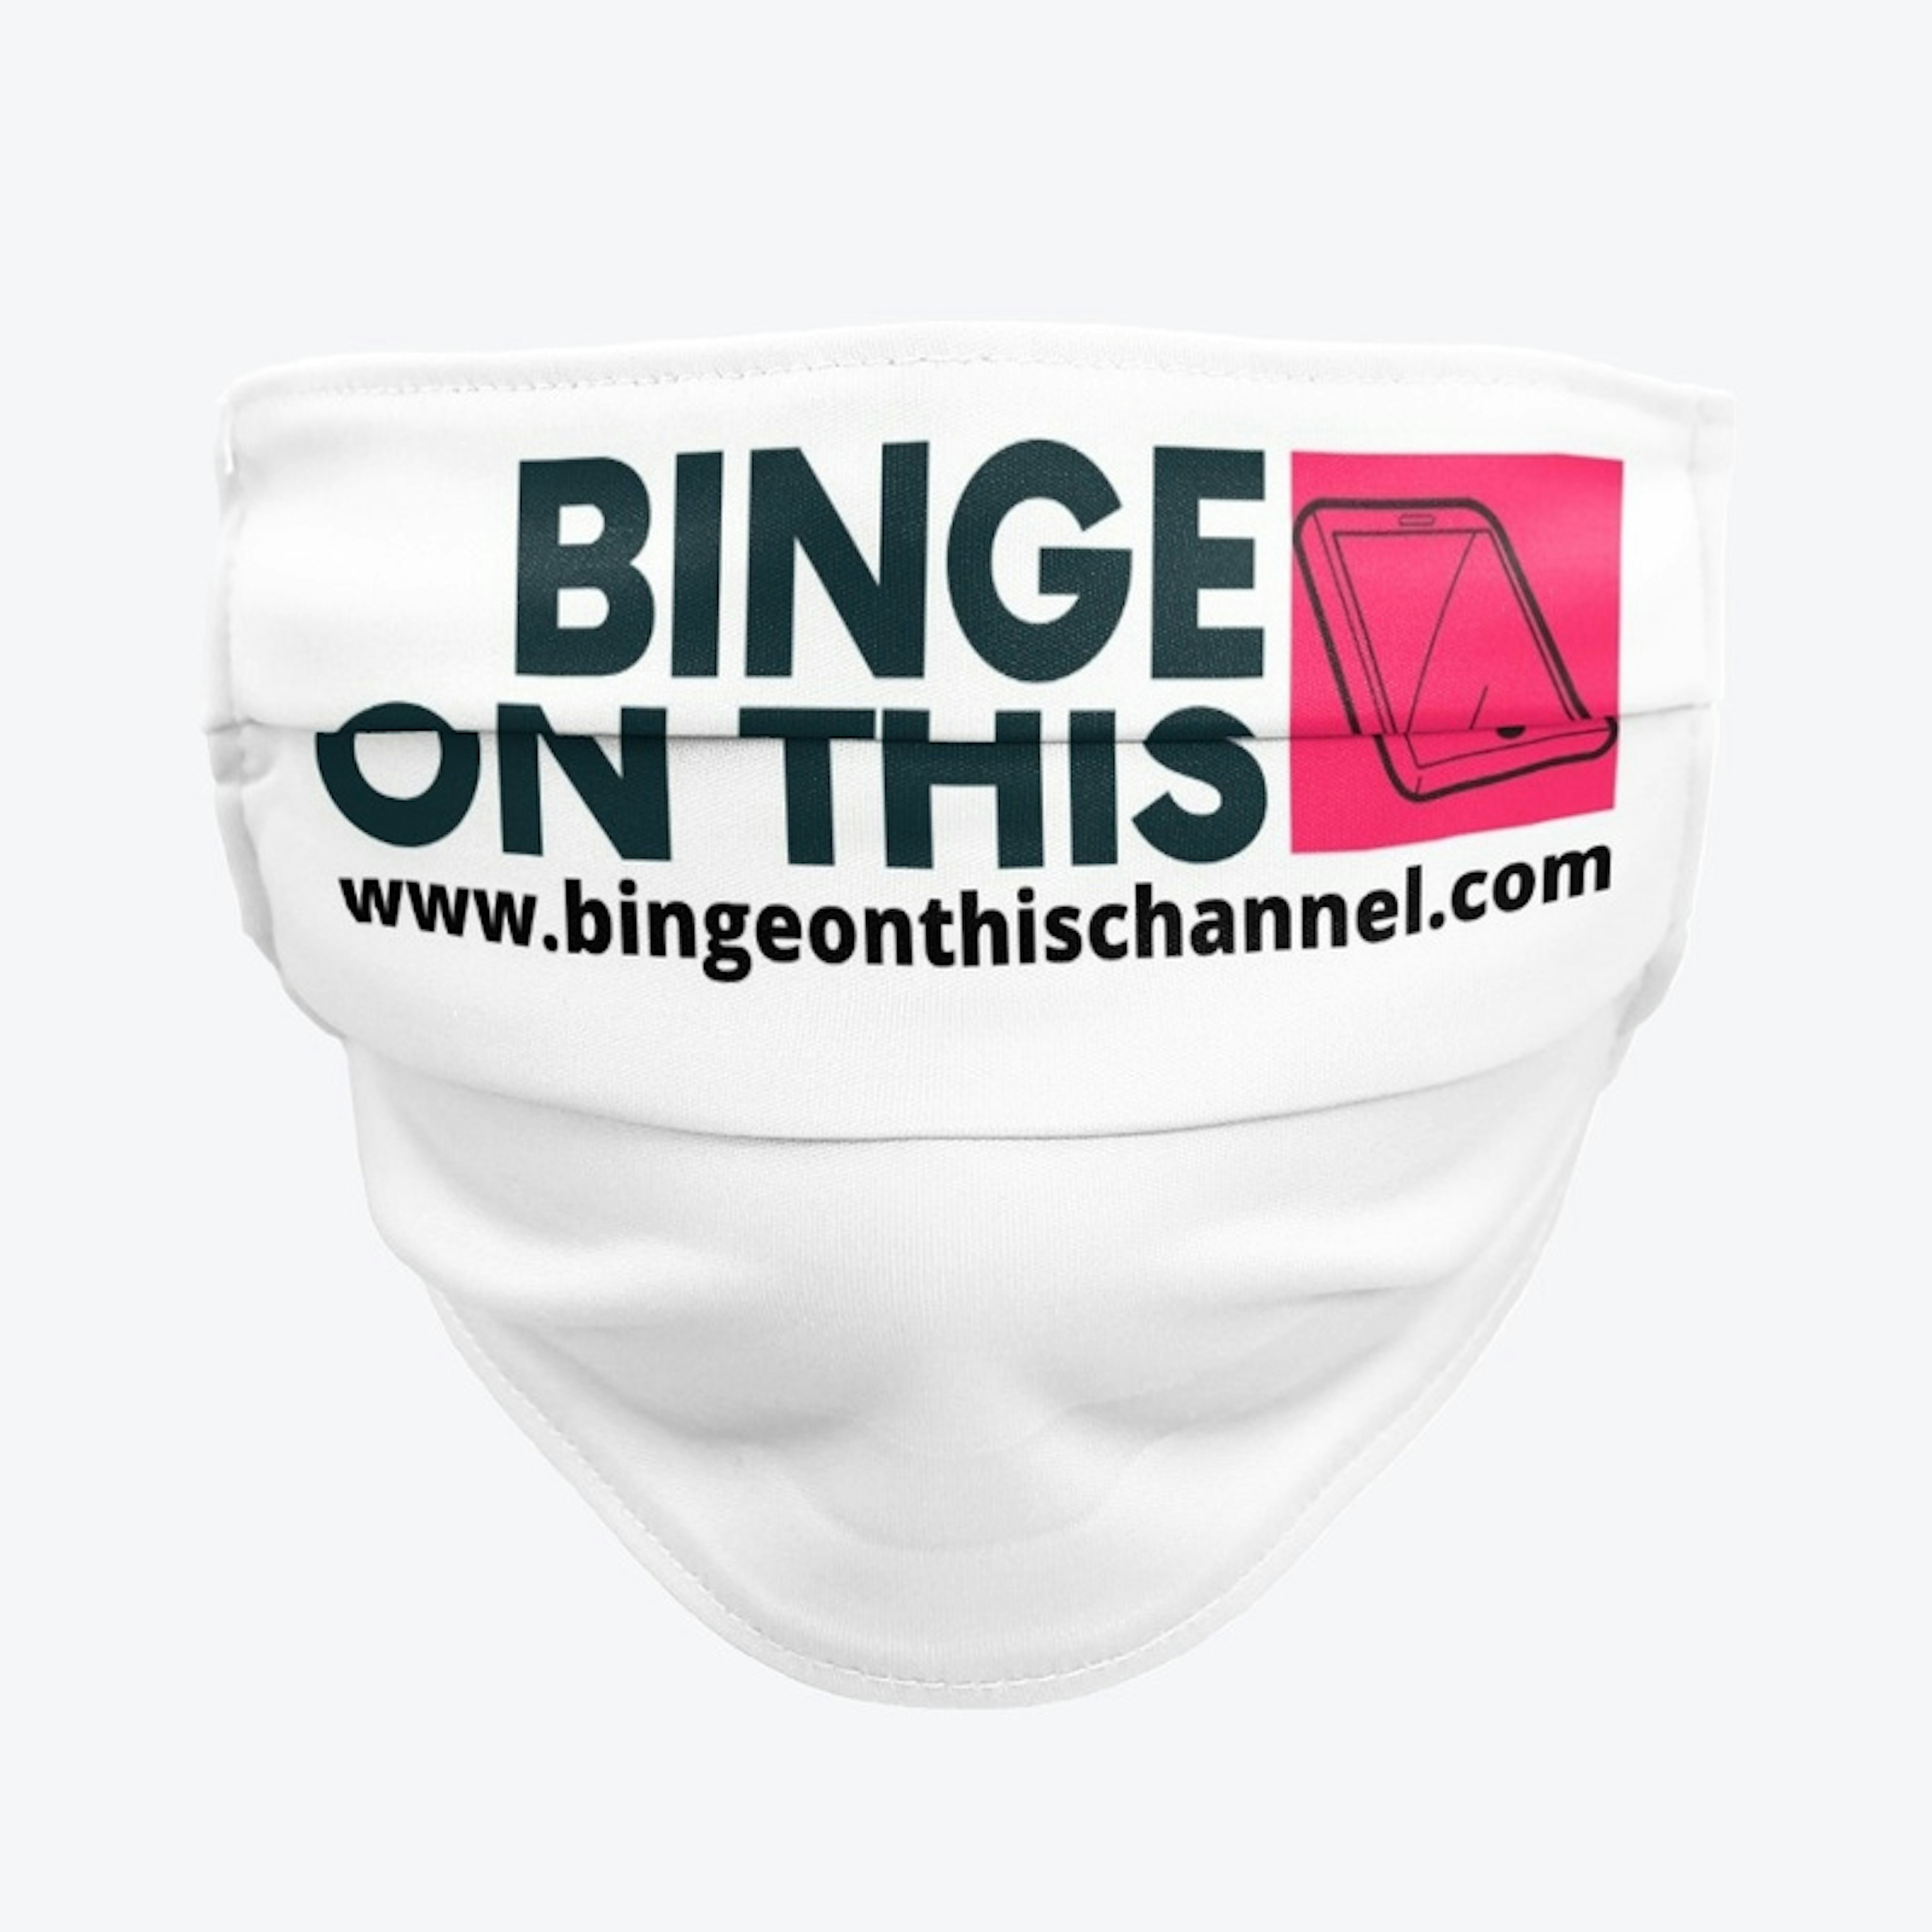 Binge on this channel phone logo